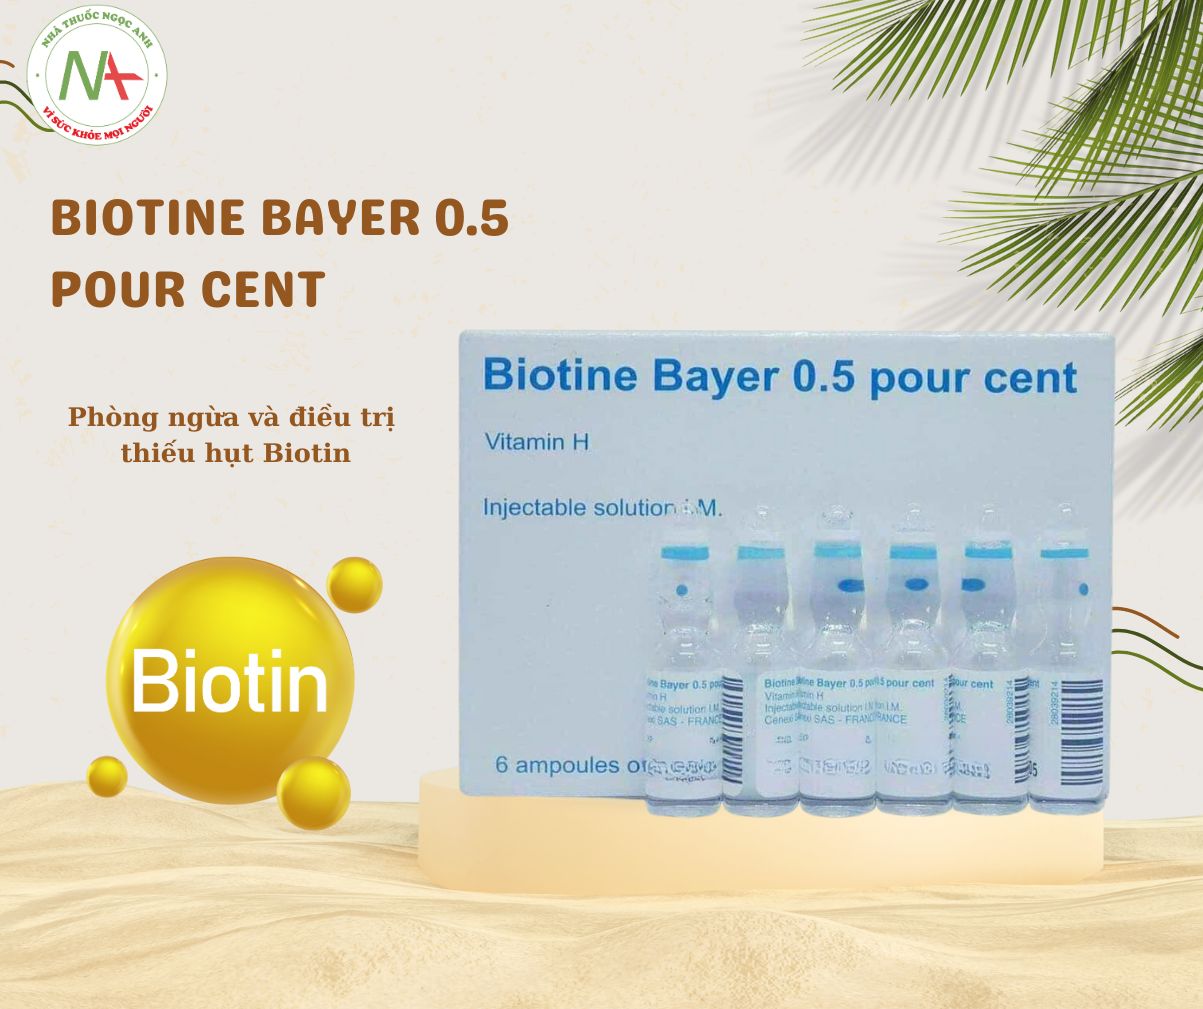 Biotine Bayer 0.5 pour cent